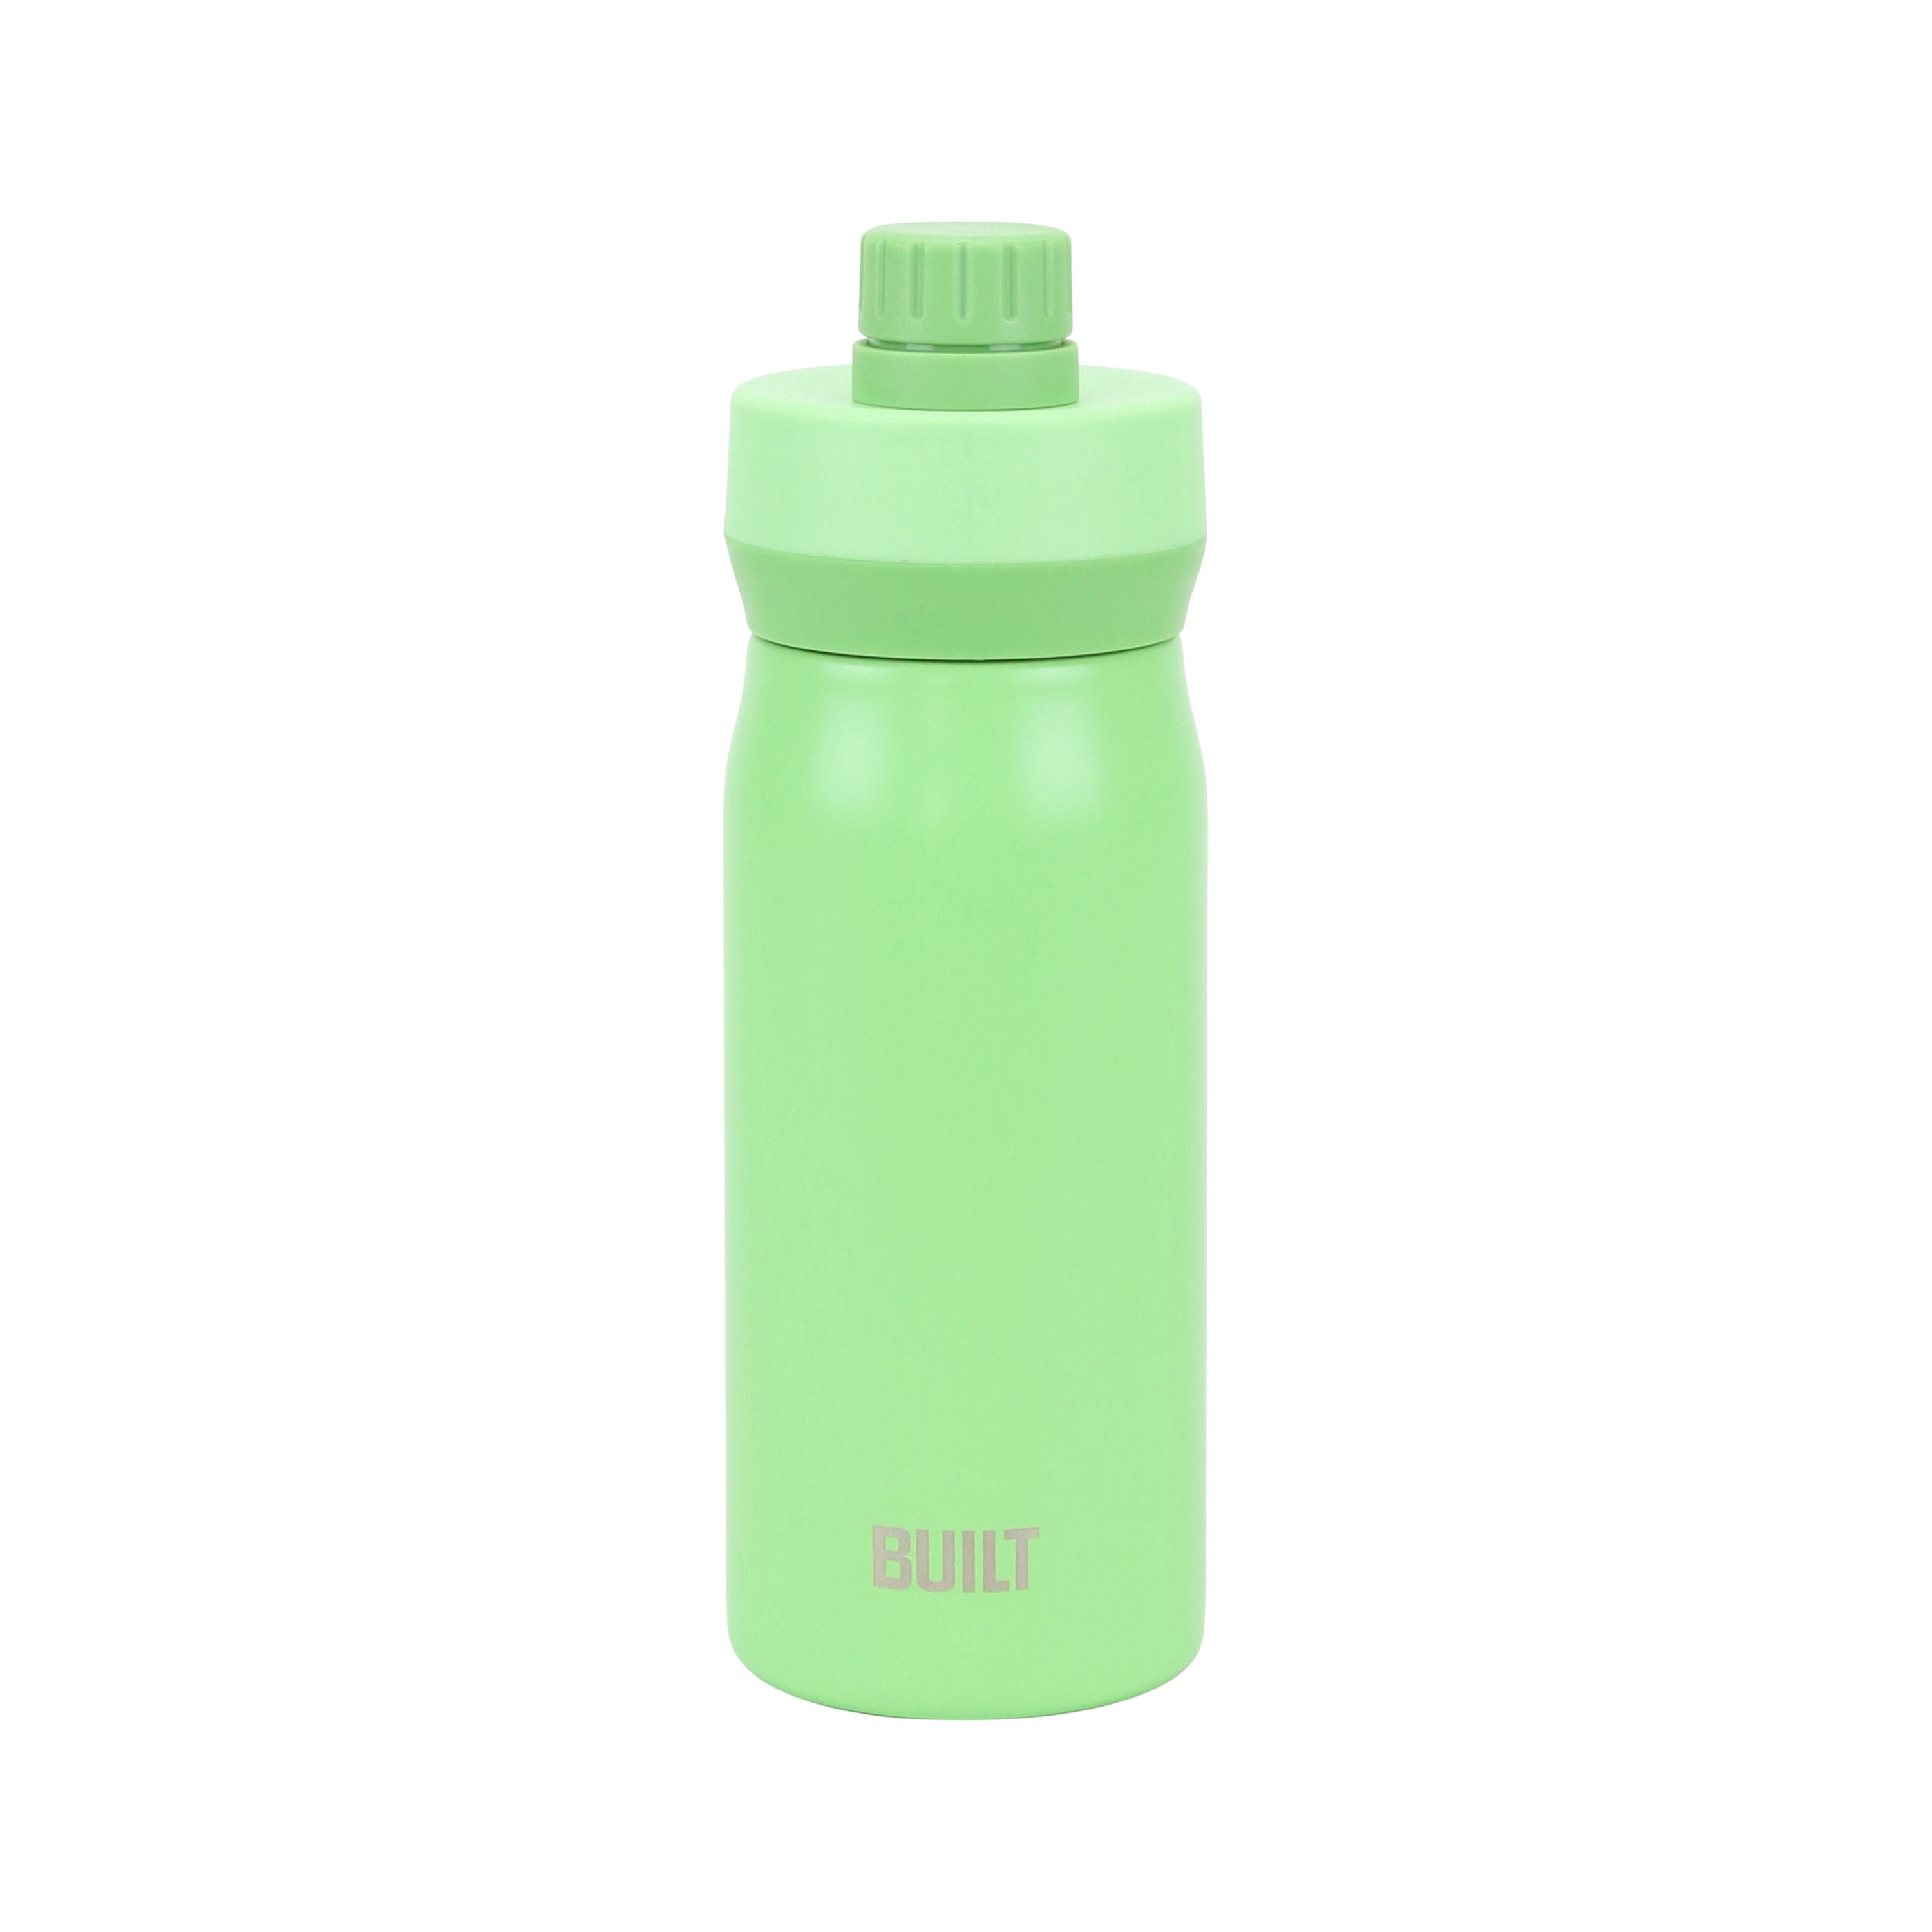 XBOTTLE 1 Gallon Water Bottle with Chug lid, BPA Free Dishwasher Safe 128oz  Large Water Bottle with …See more XBOTTLE 1 Gallon Water Bottle with Chug